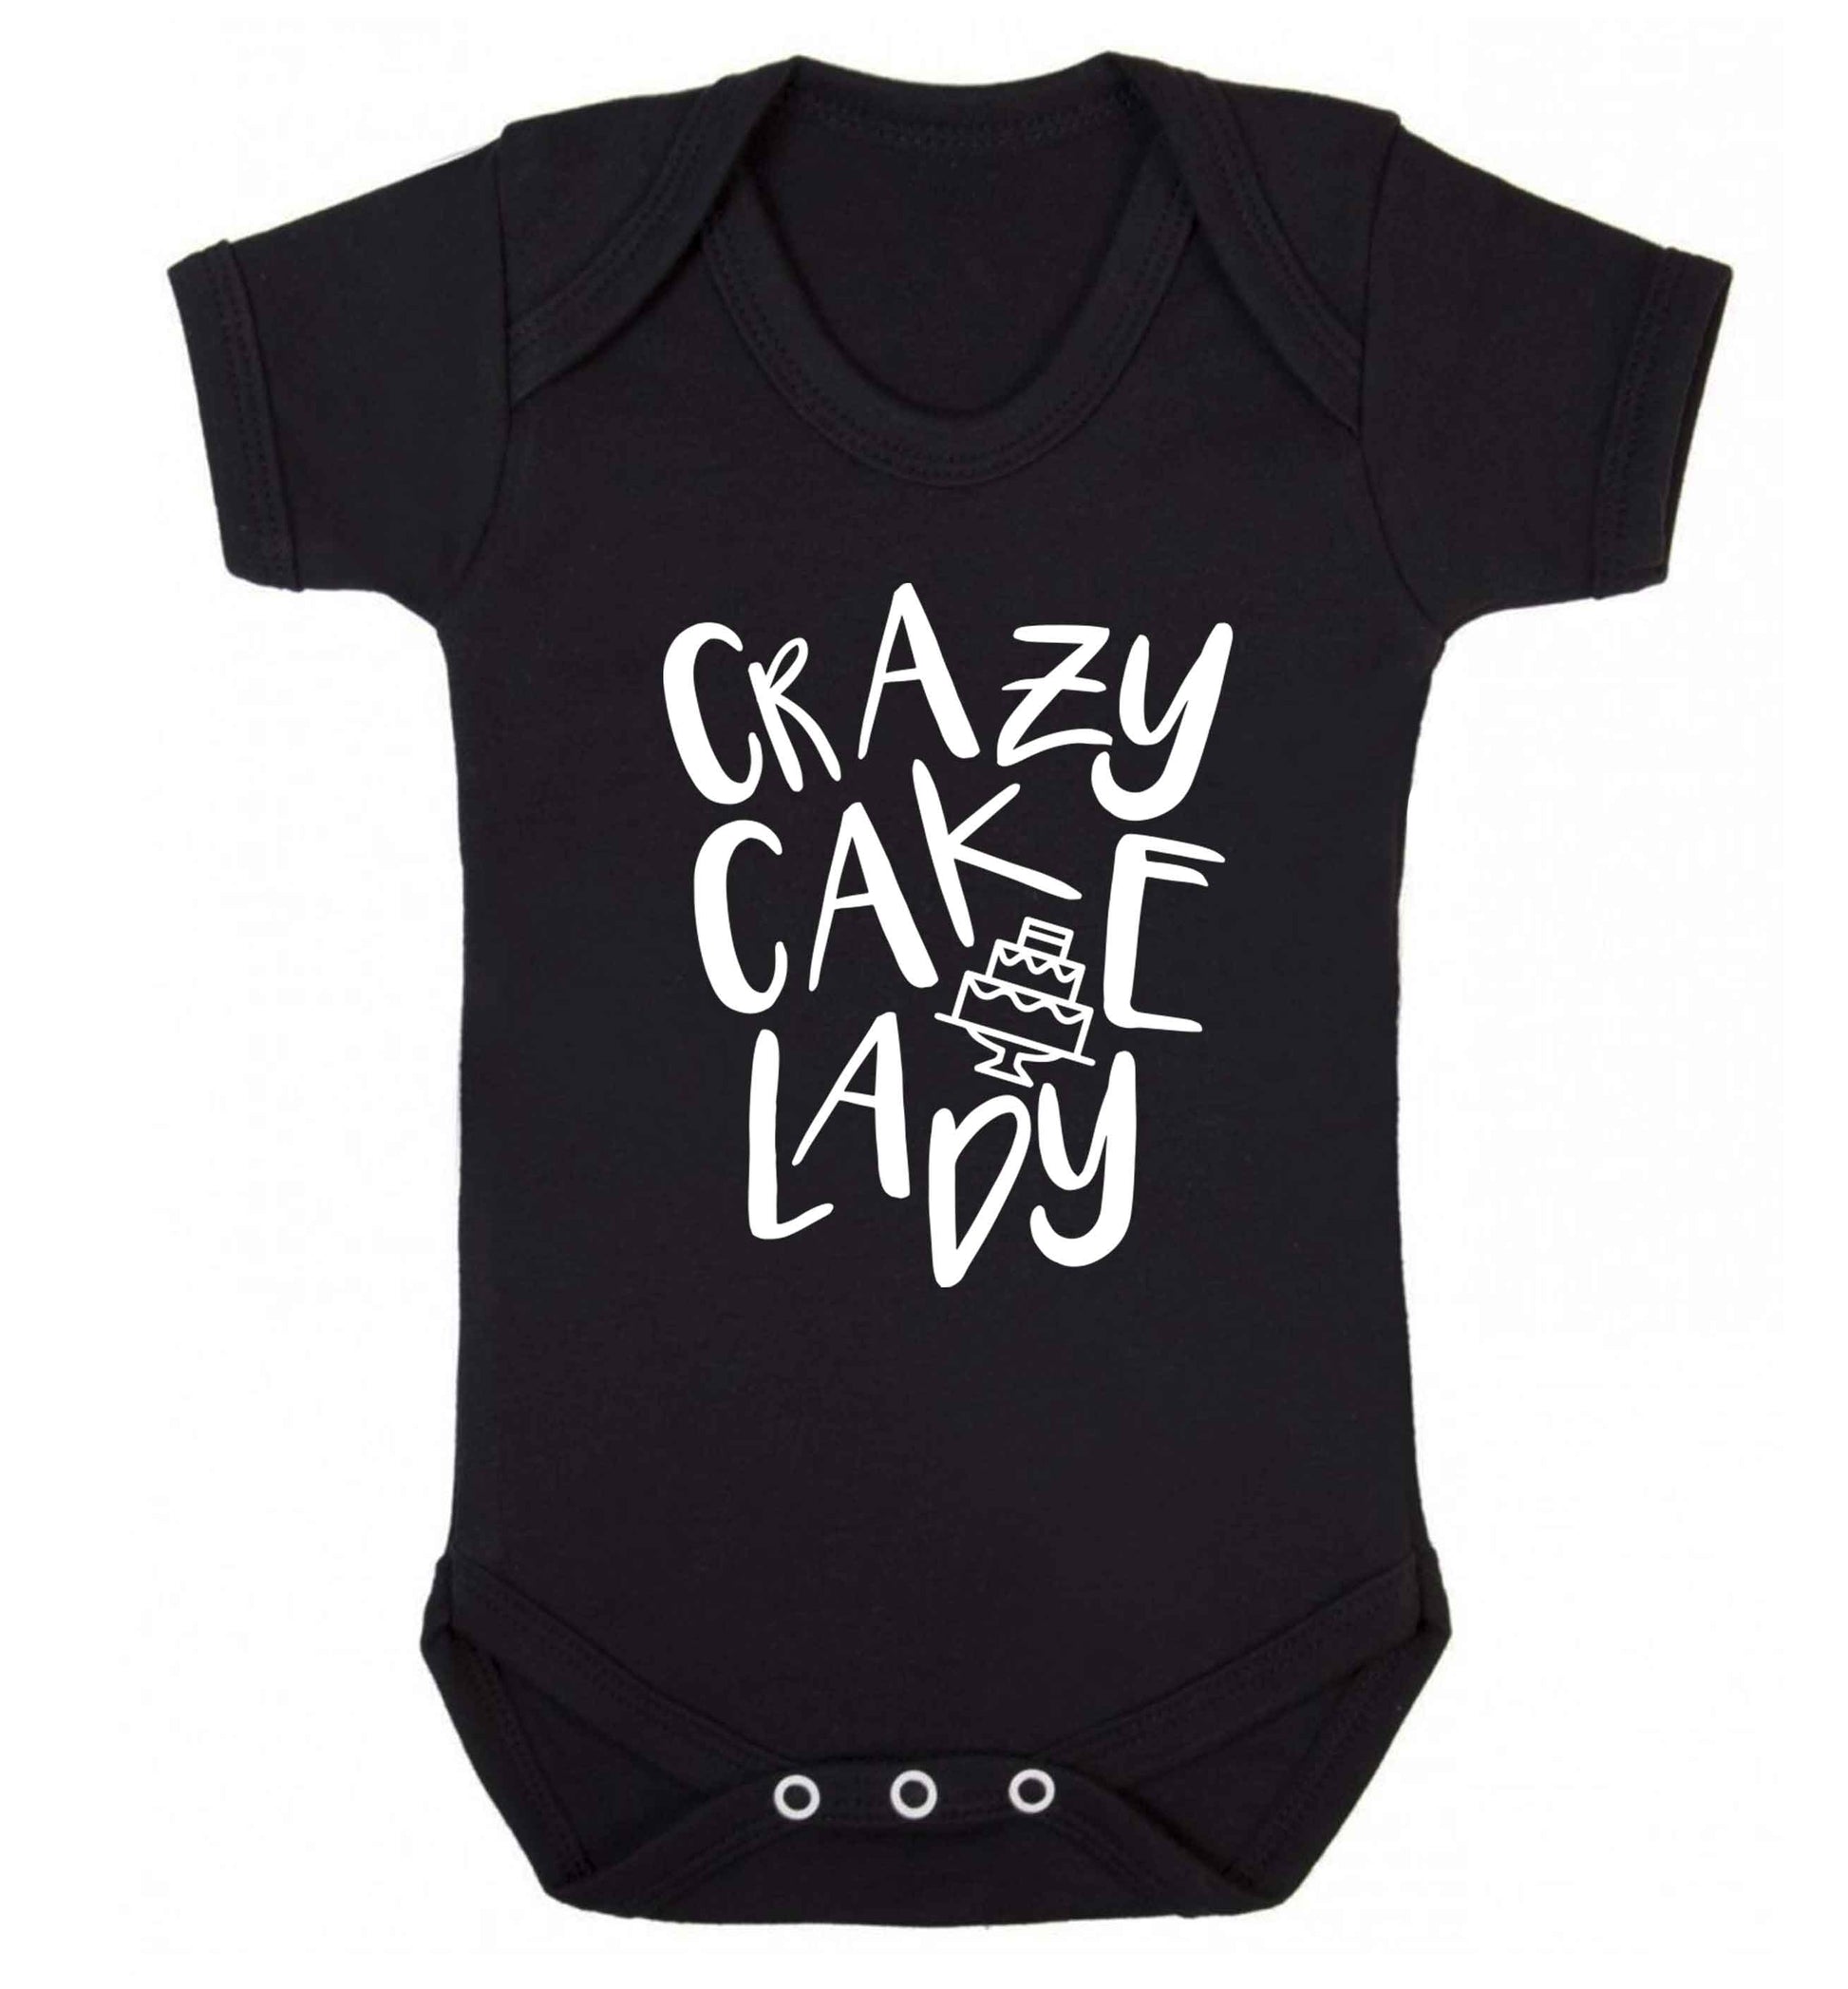 Crazy cake lady Baby Vest black 18-24 months